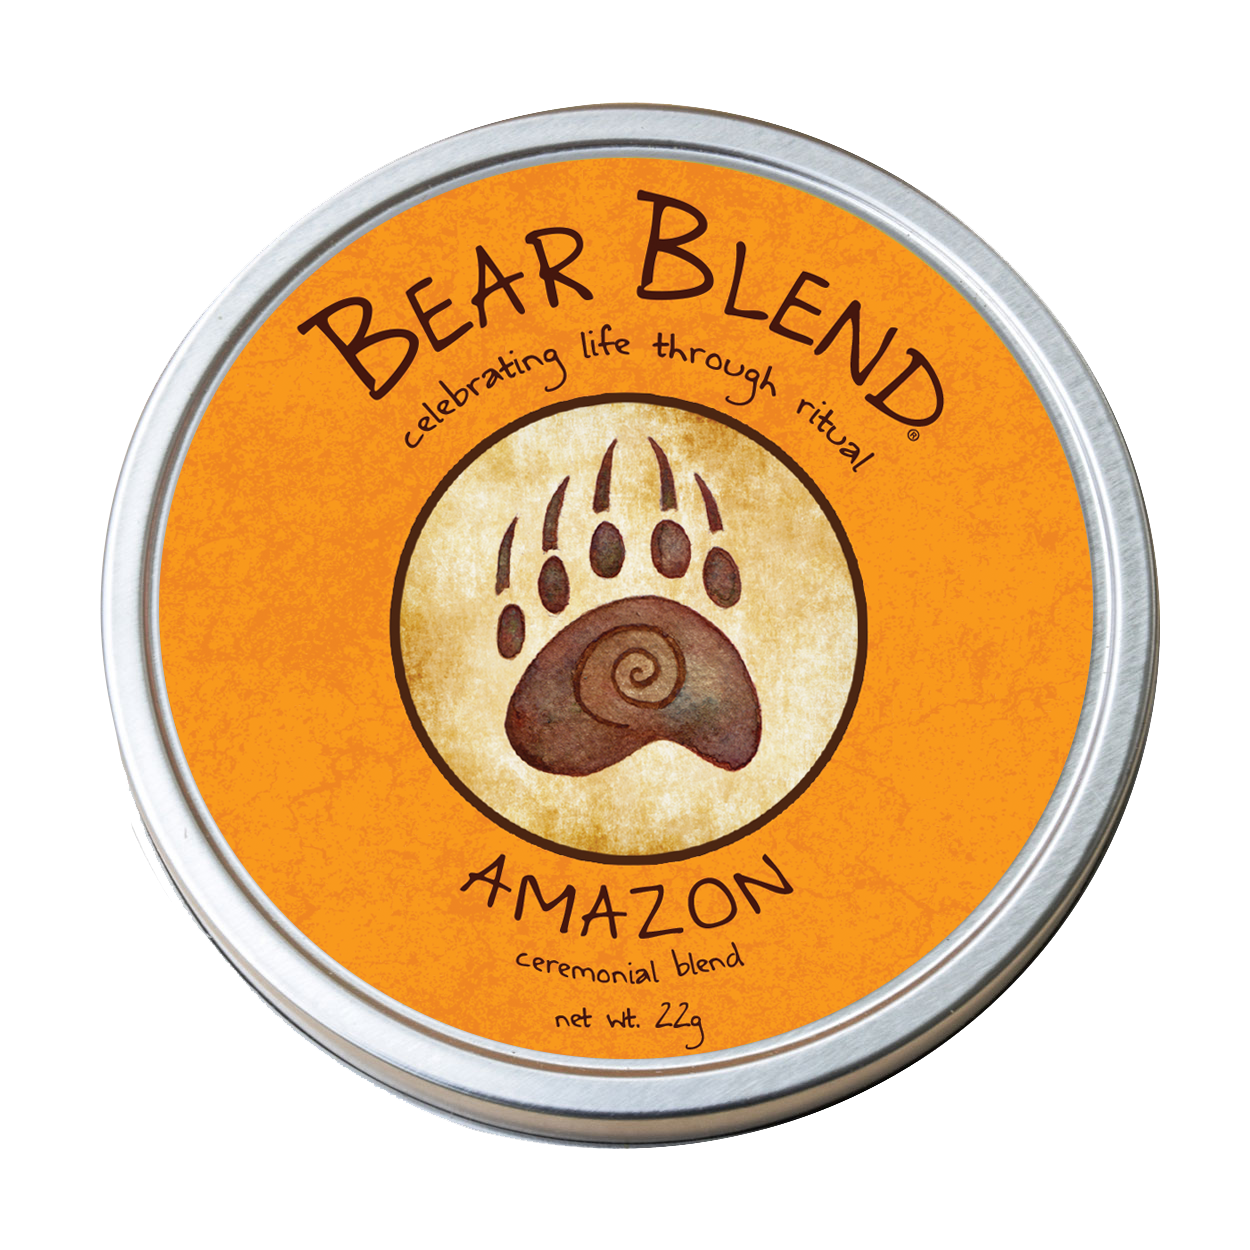 Bear Blend: Amazon Herbal Ceremonial Blend